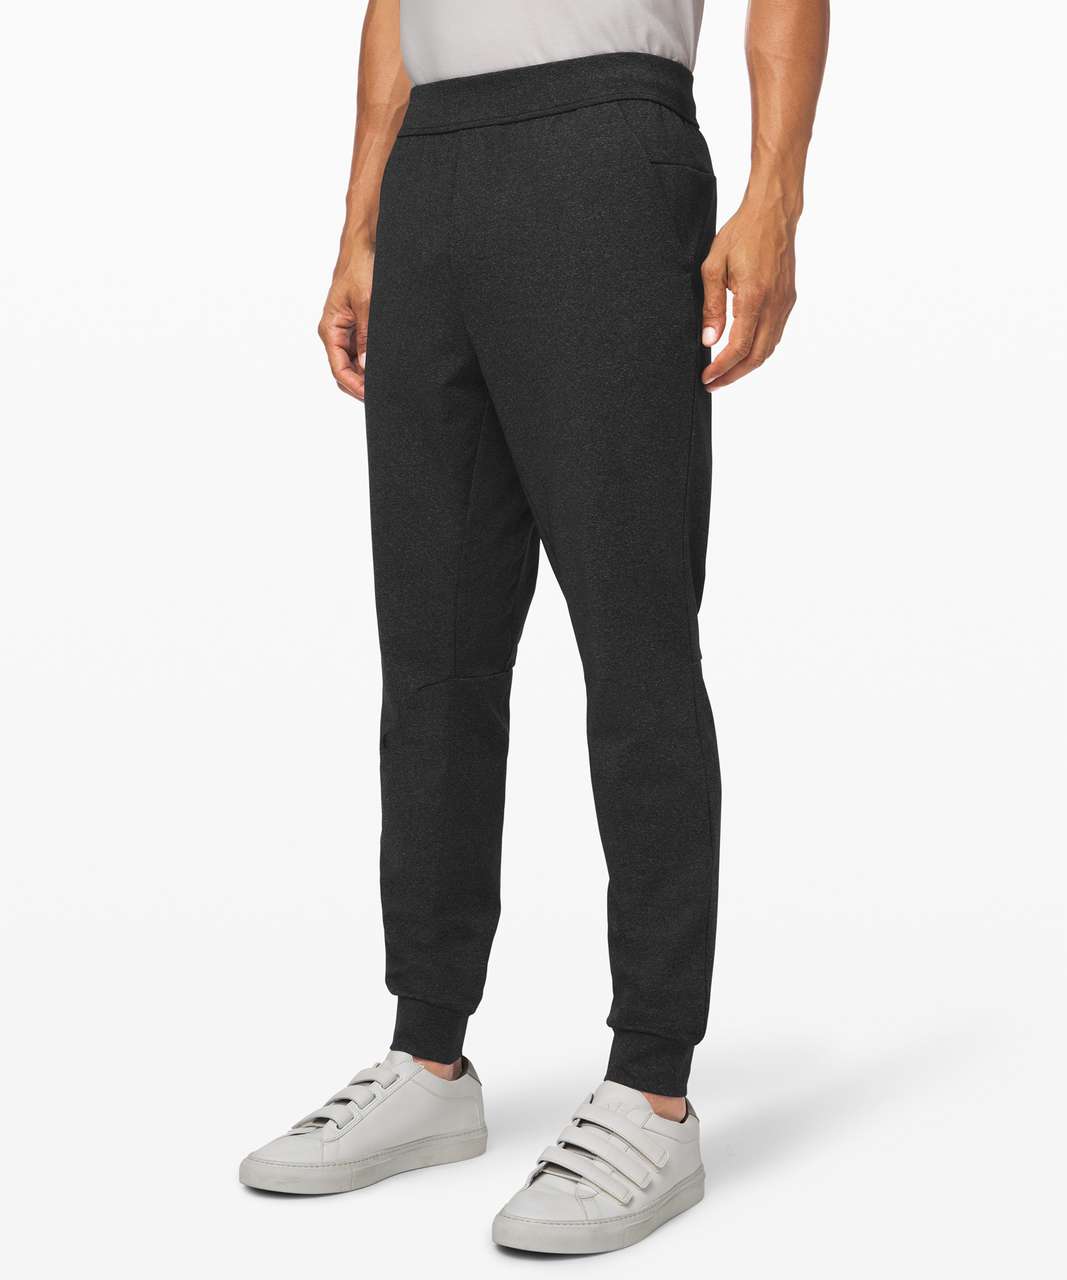 Lululemon Intent Jogger Size: S - Black  Black jogger pants, Black joggers,  Clothes design